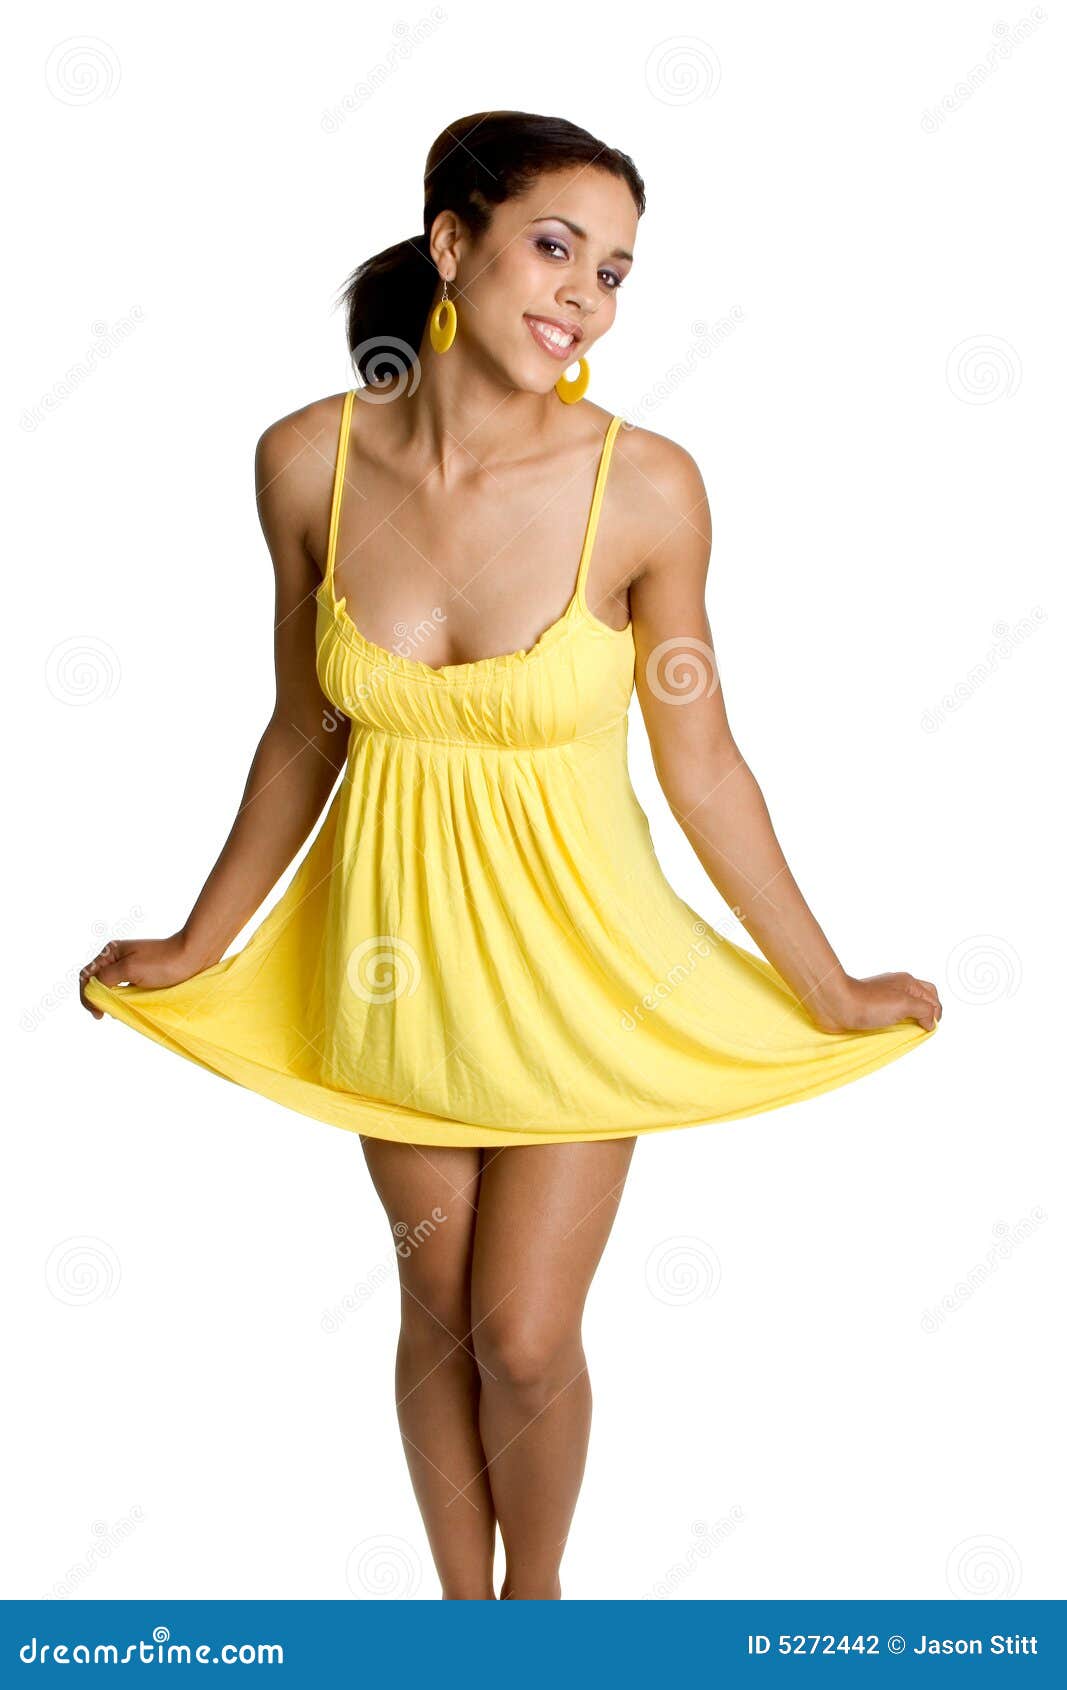 Stock Photography: Yellow Dress Woman